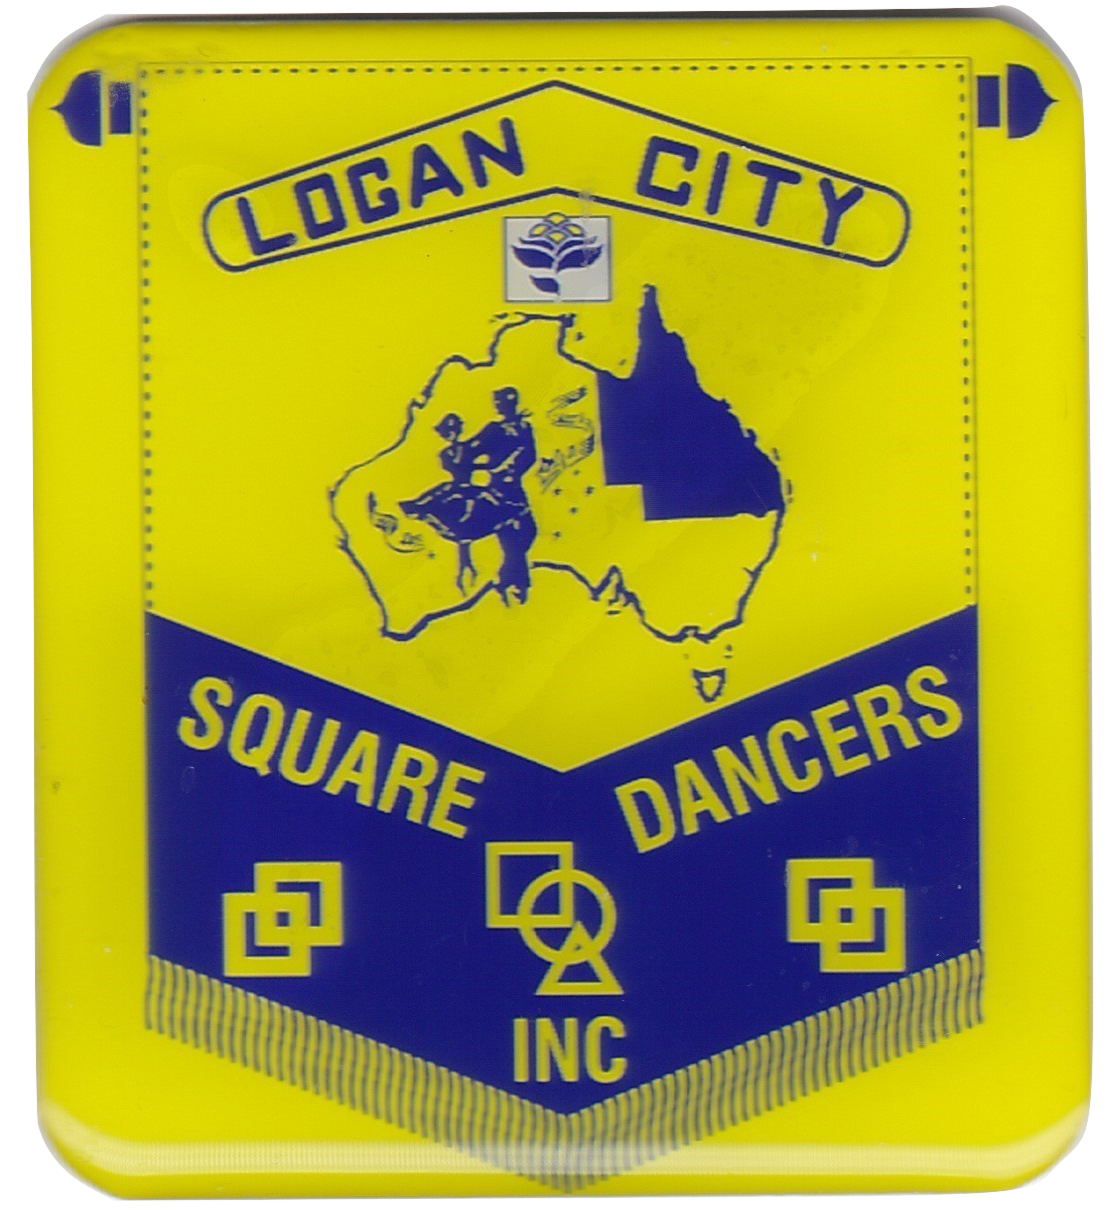 LOGAN CITY SQUARE DANCERS Inc.